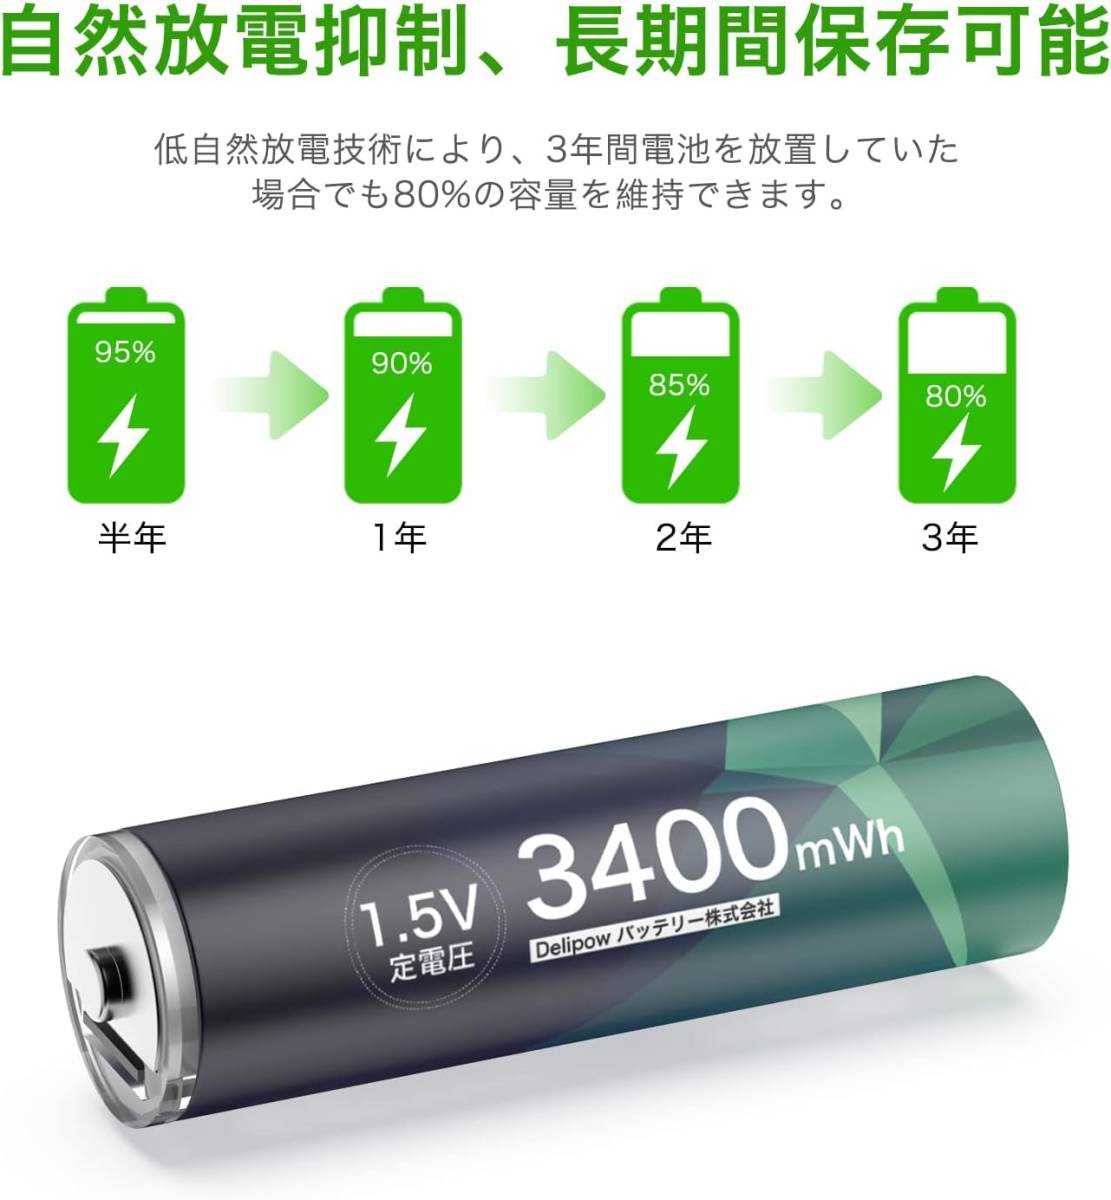  одиночный 3 перезаряжаемая батарея 4шт.@MXBatt lithium ион перезаряжаемая батарея 1.5V перезаряжаемая батарея одиночный 3 форма заряжающийся AA lithium батарейка 3400mWh защита схема есть 